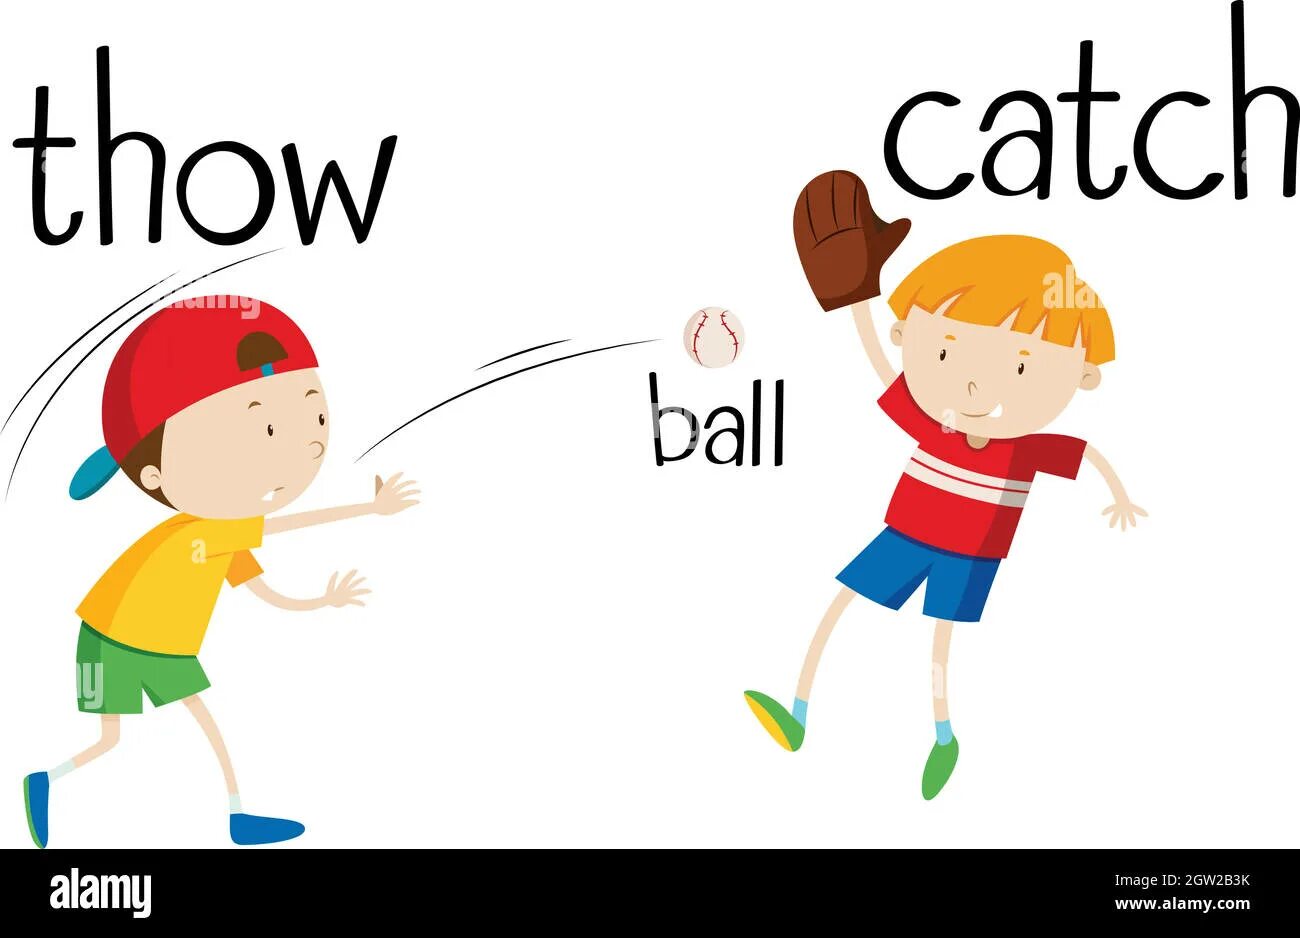 Catch mean. Catch изображение. Throw изображение. Throw картинка для детей. Catch the Ball Flashcard.